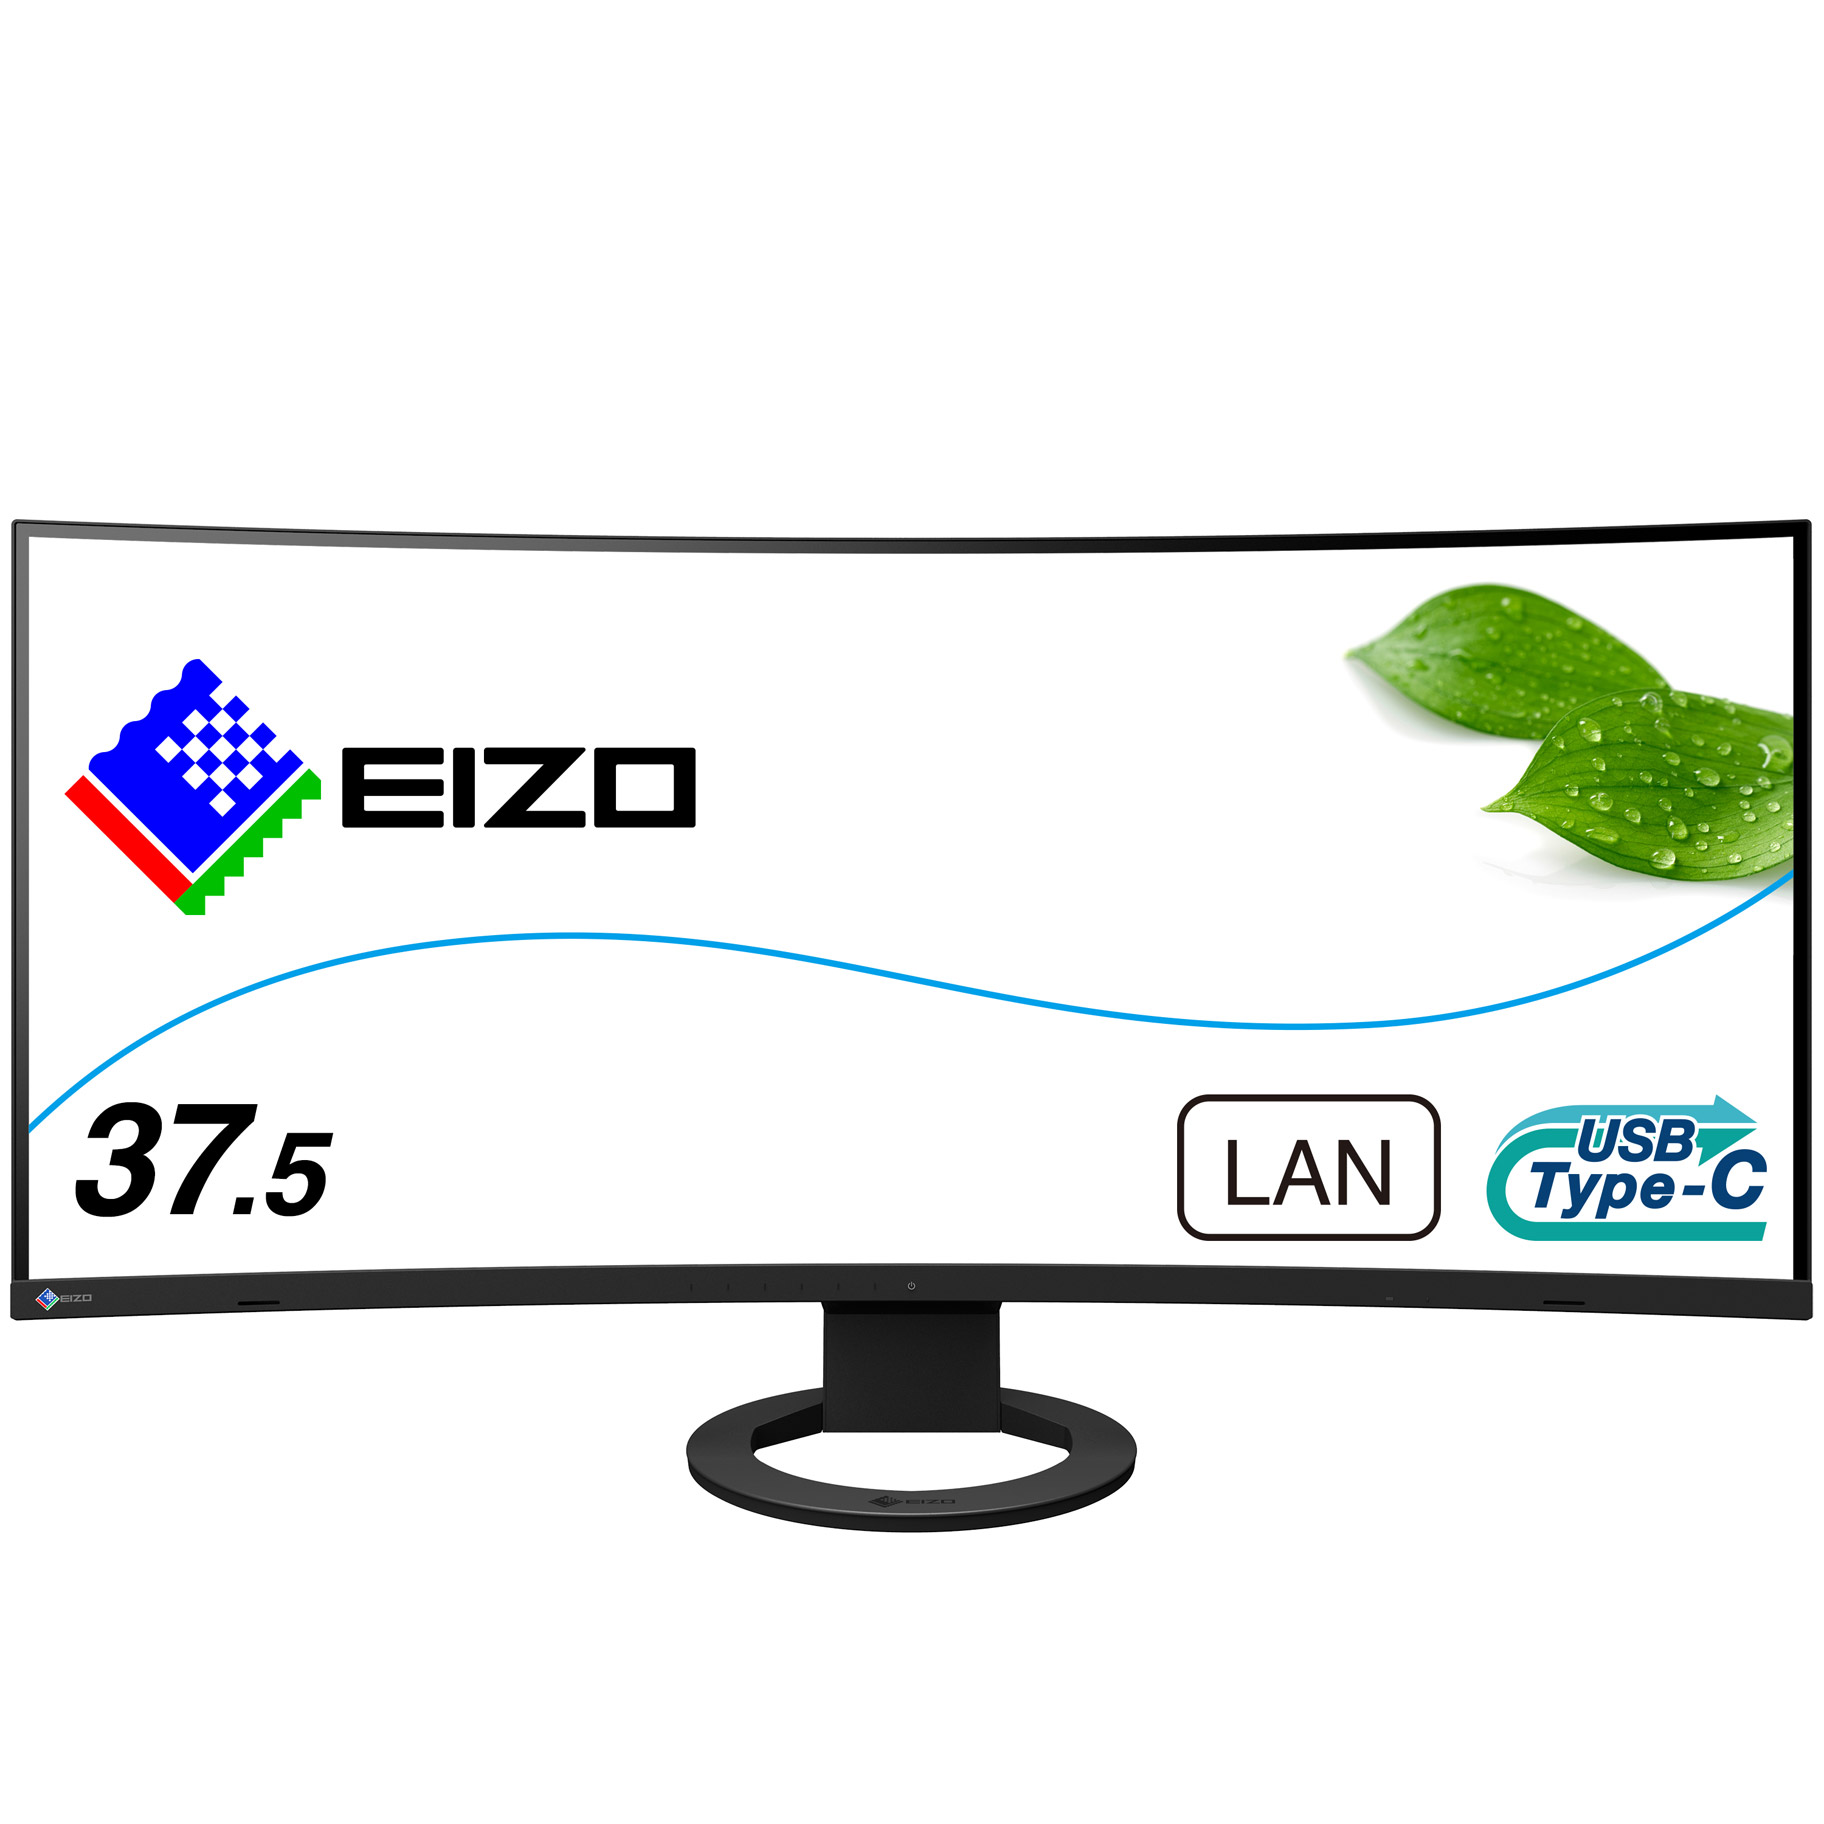 EIZO EV2450 FlexScan 23.8インチ IPS 液晶モニター